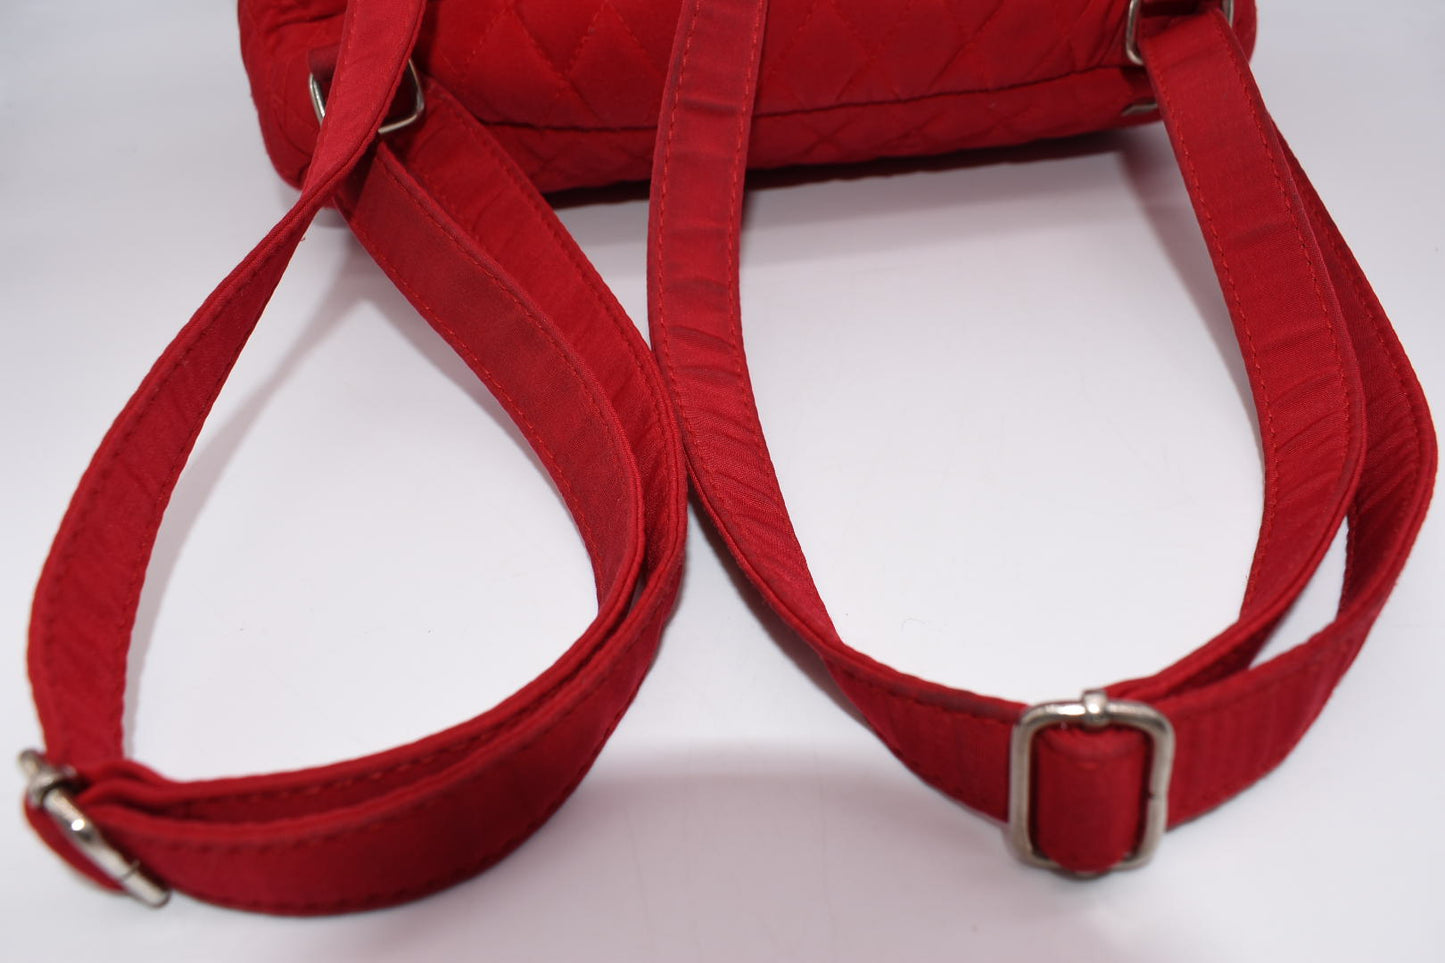 Vera Bradley Small Backpack in Microfiber Red